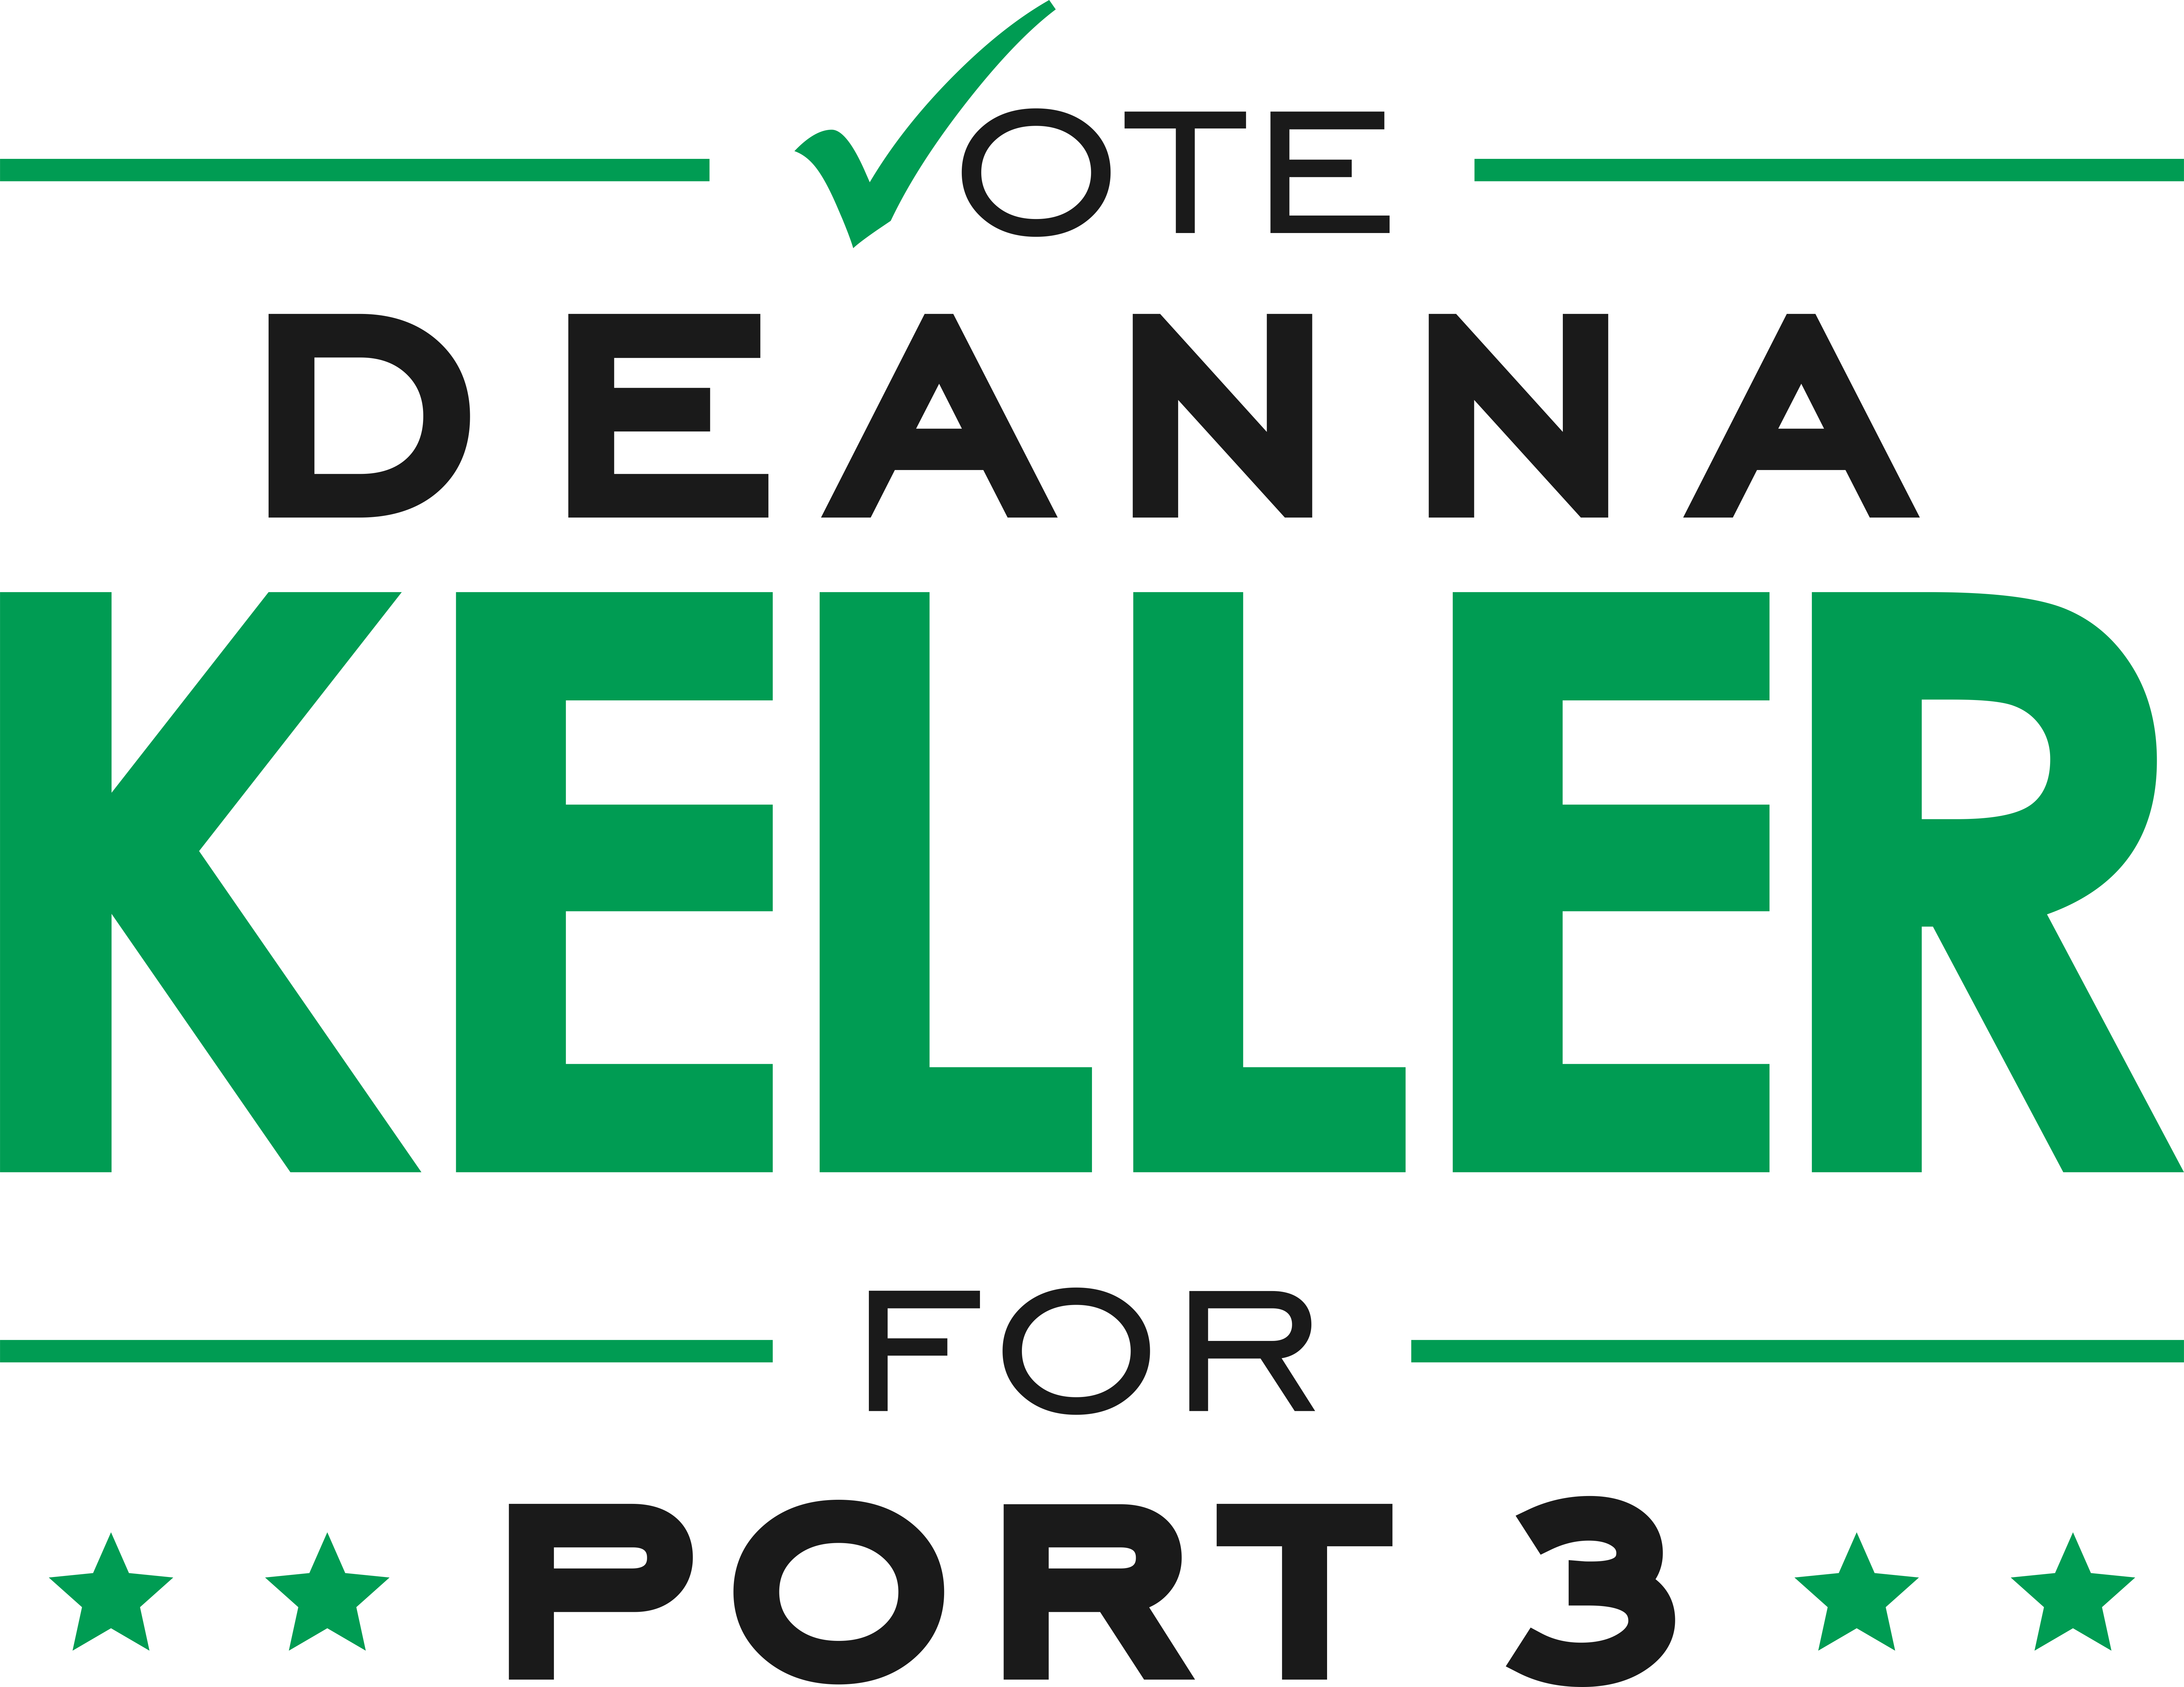 Elect Deanna Keller